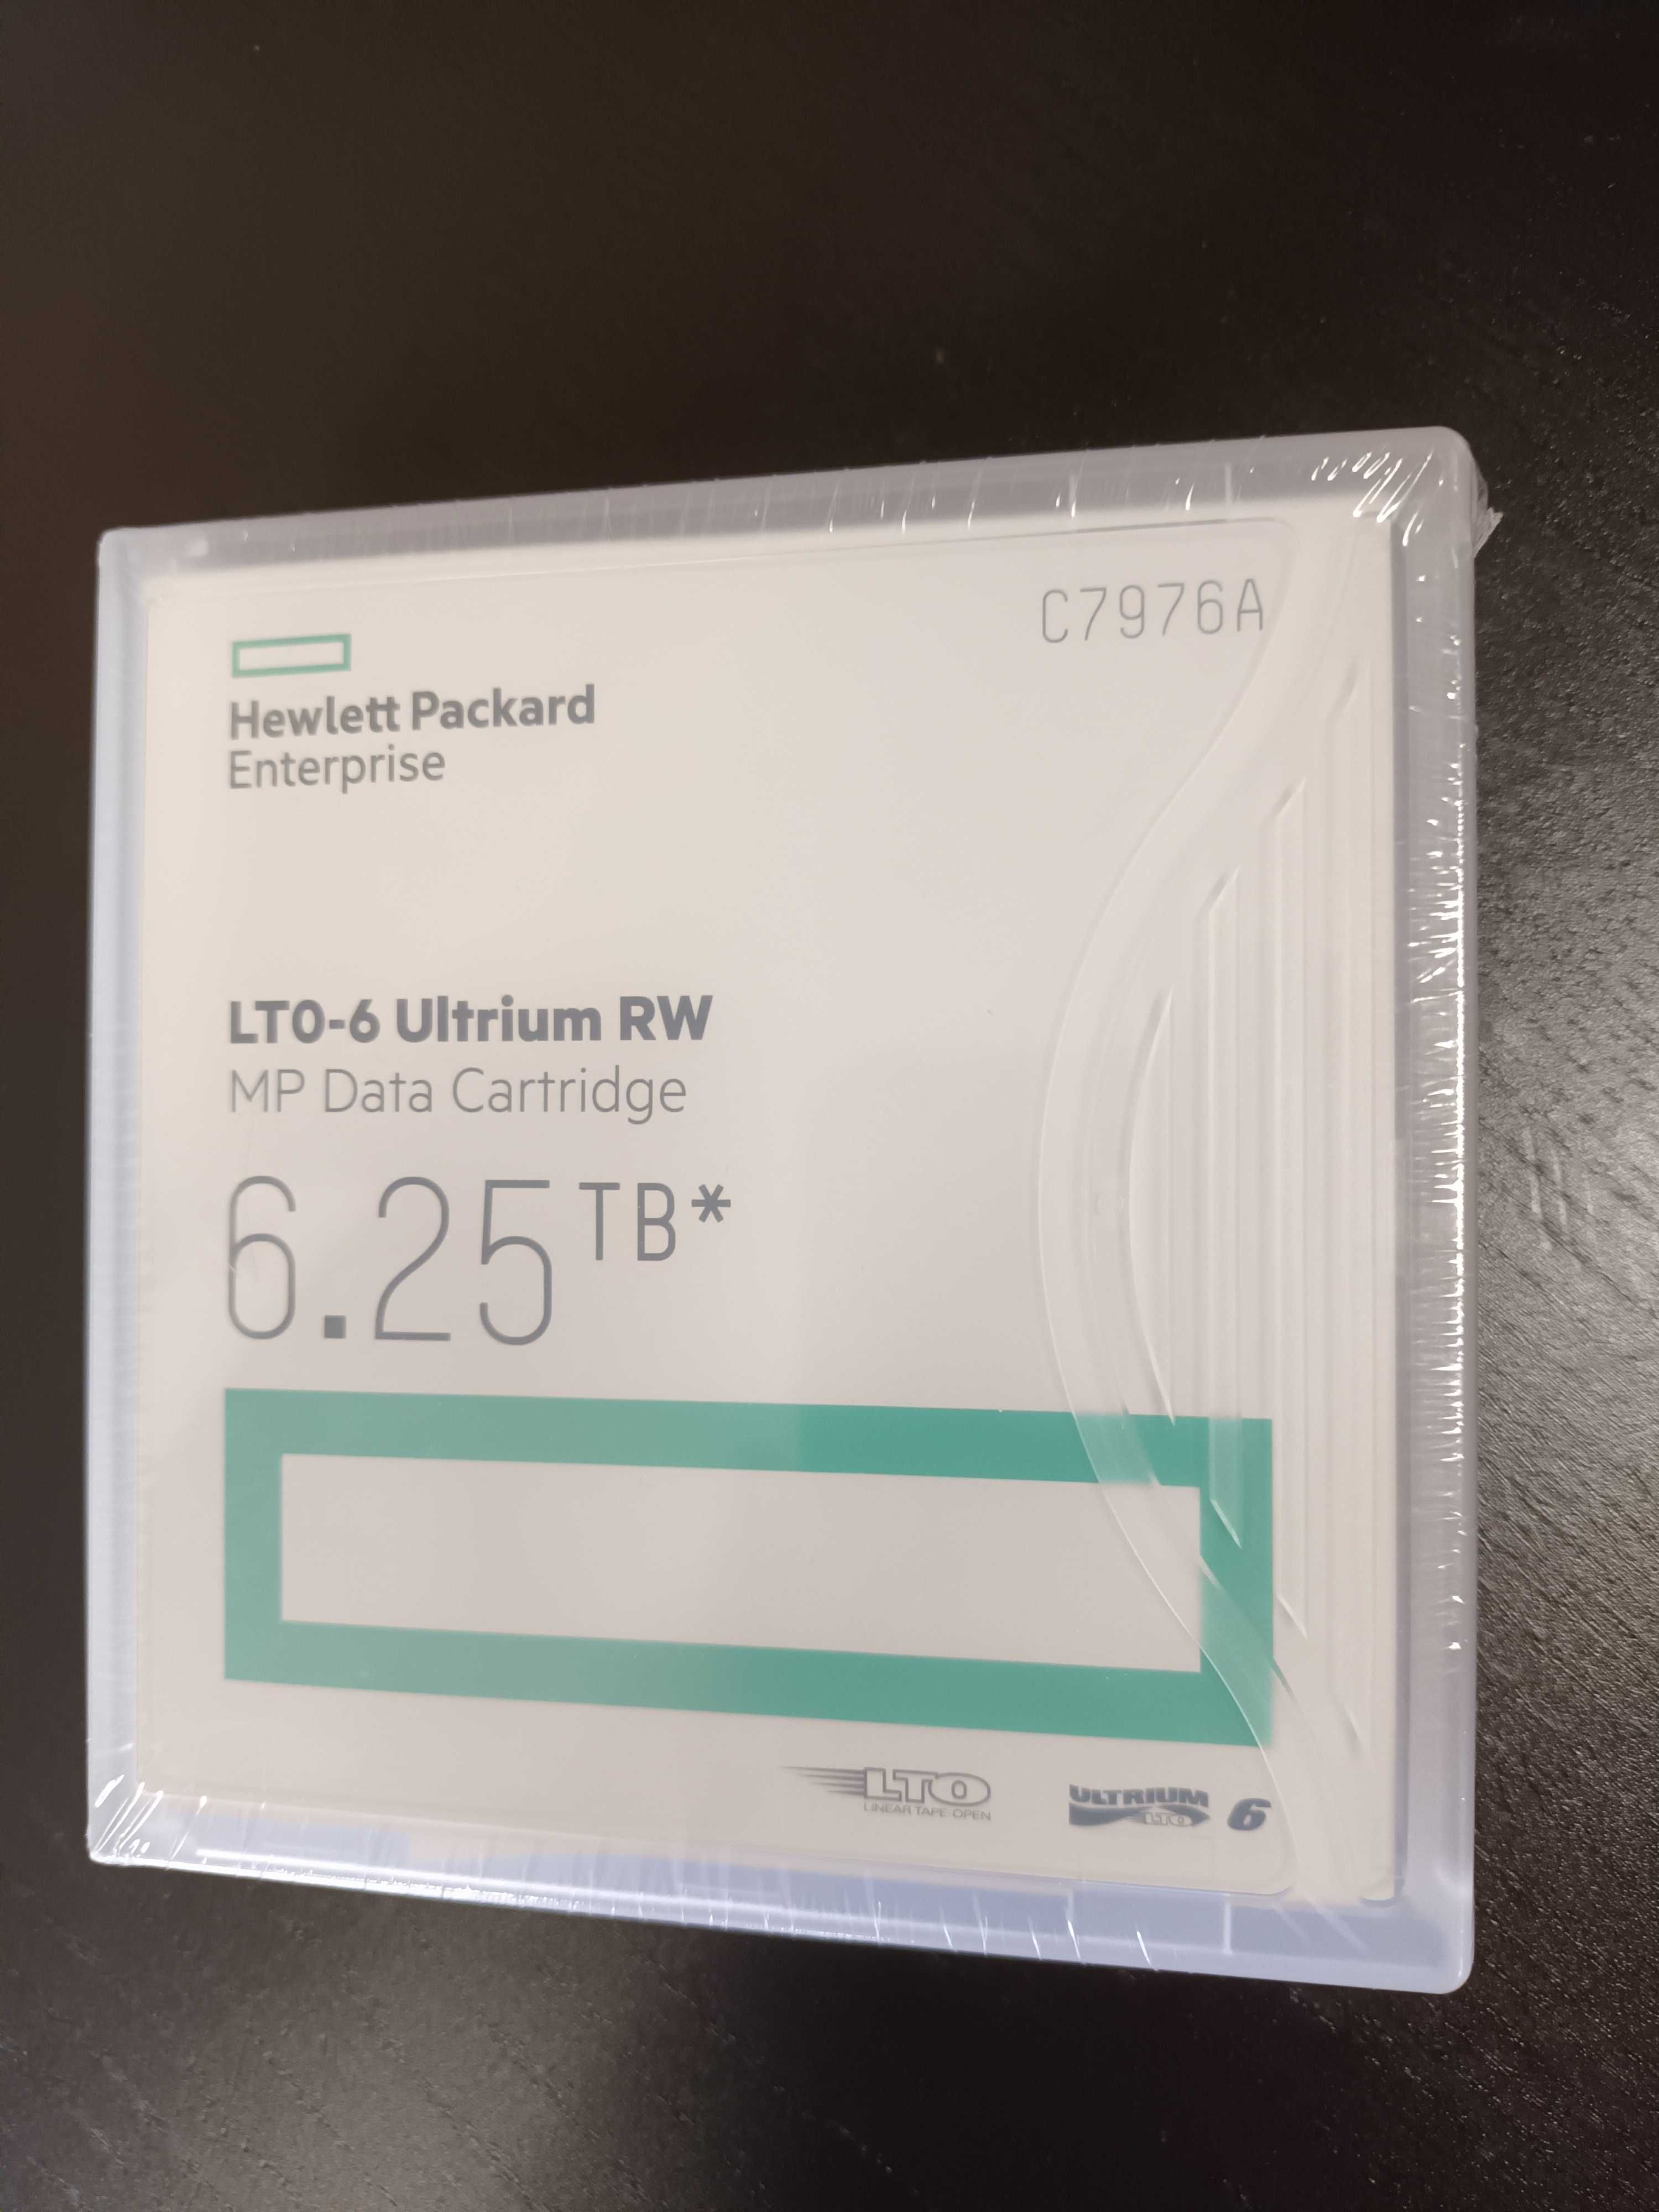 MP Data Cartridge 6.25 TB LTO-6 Ultrium RW